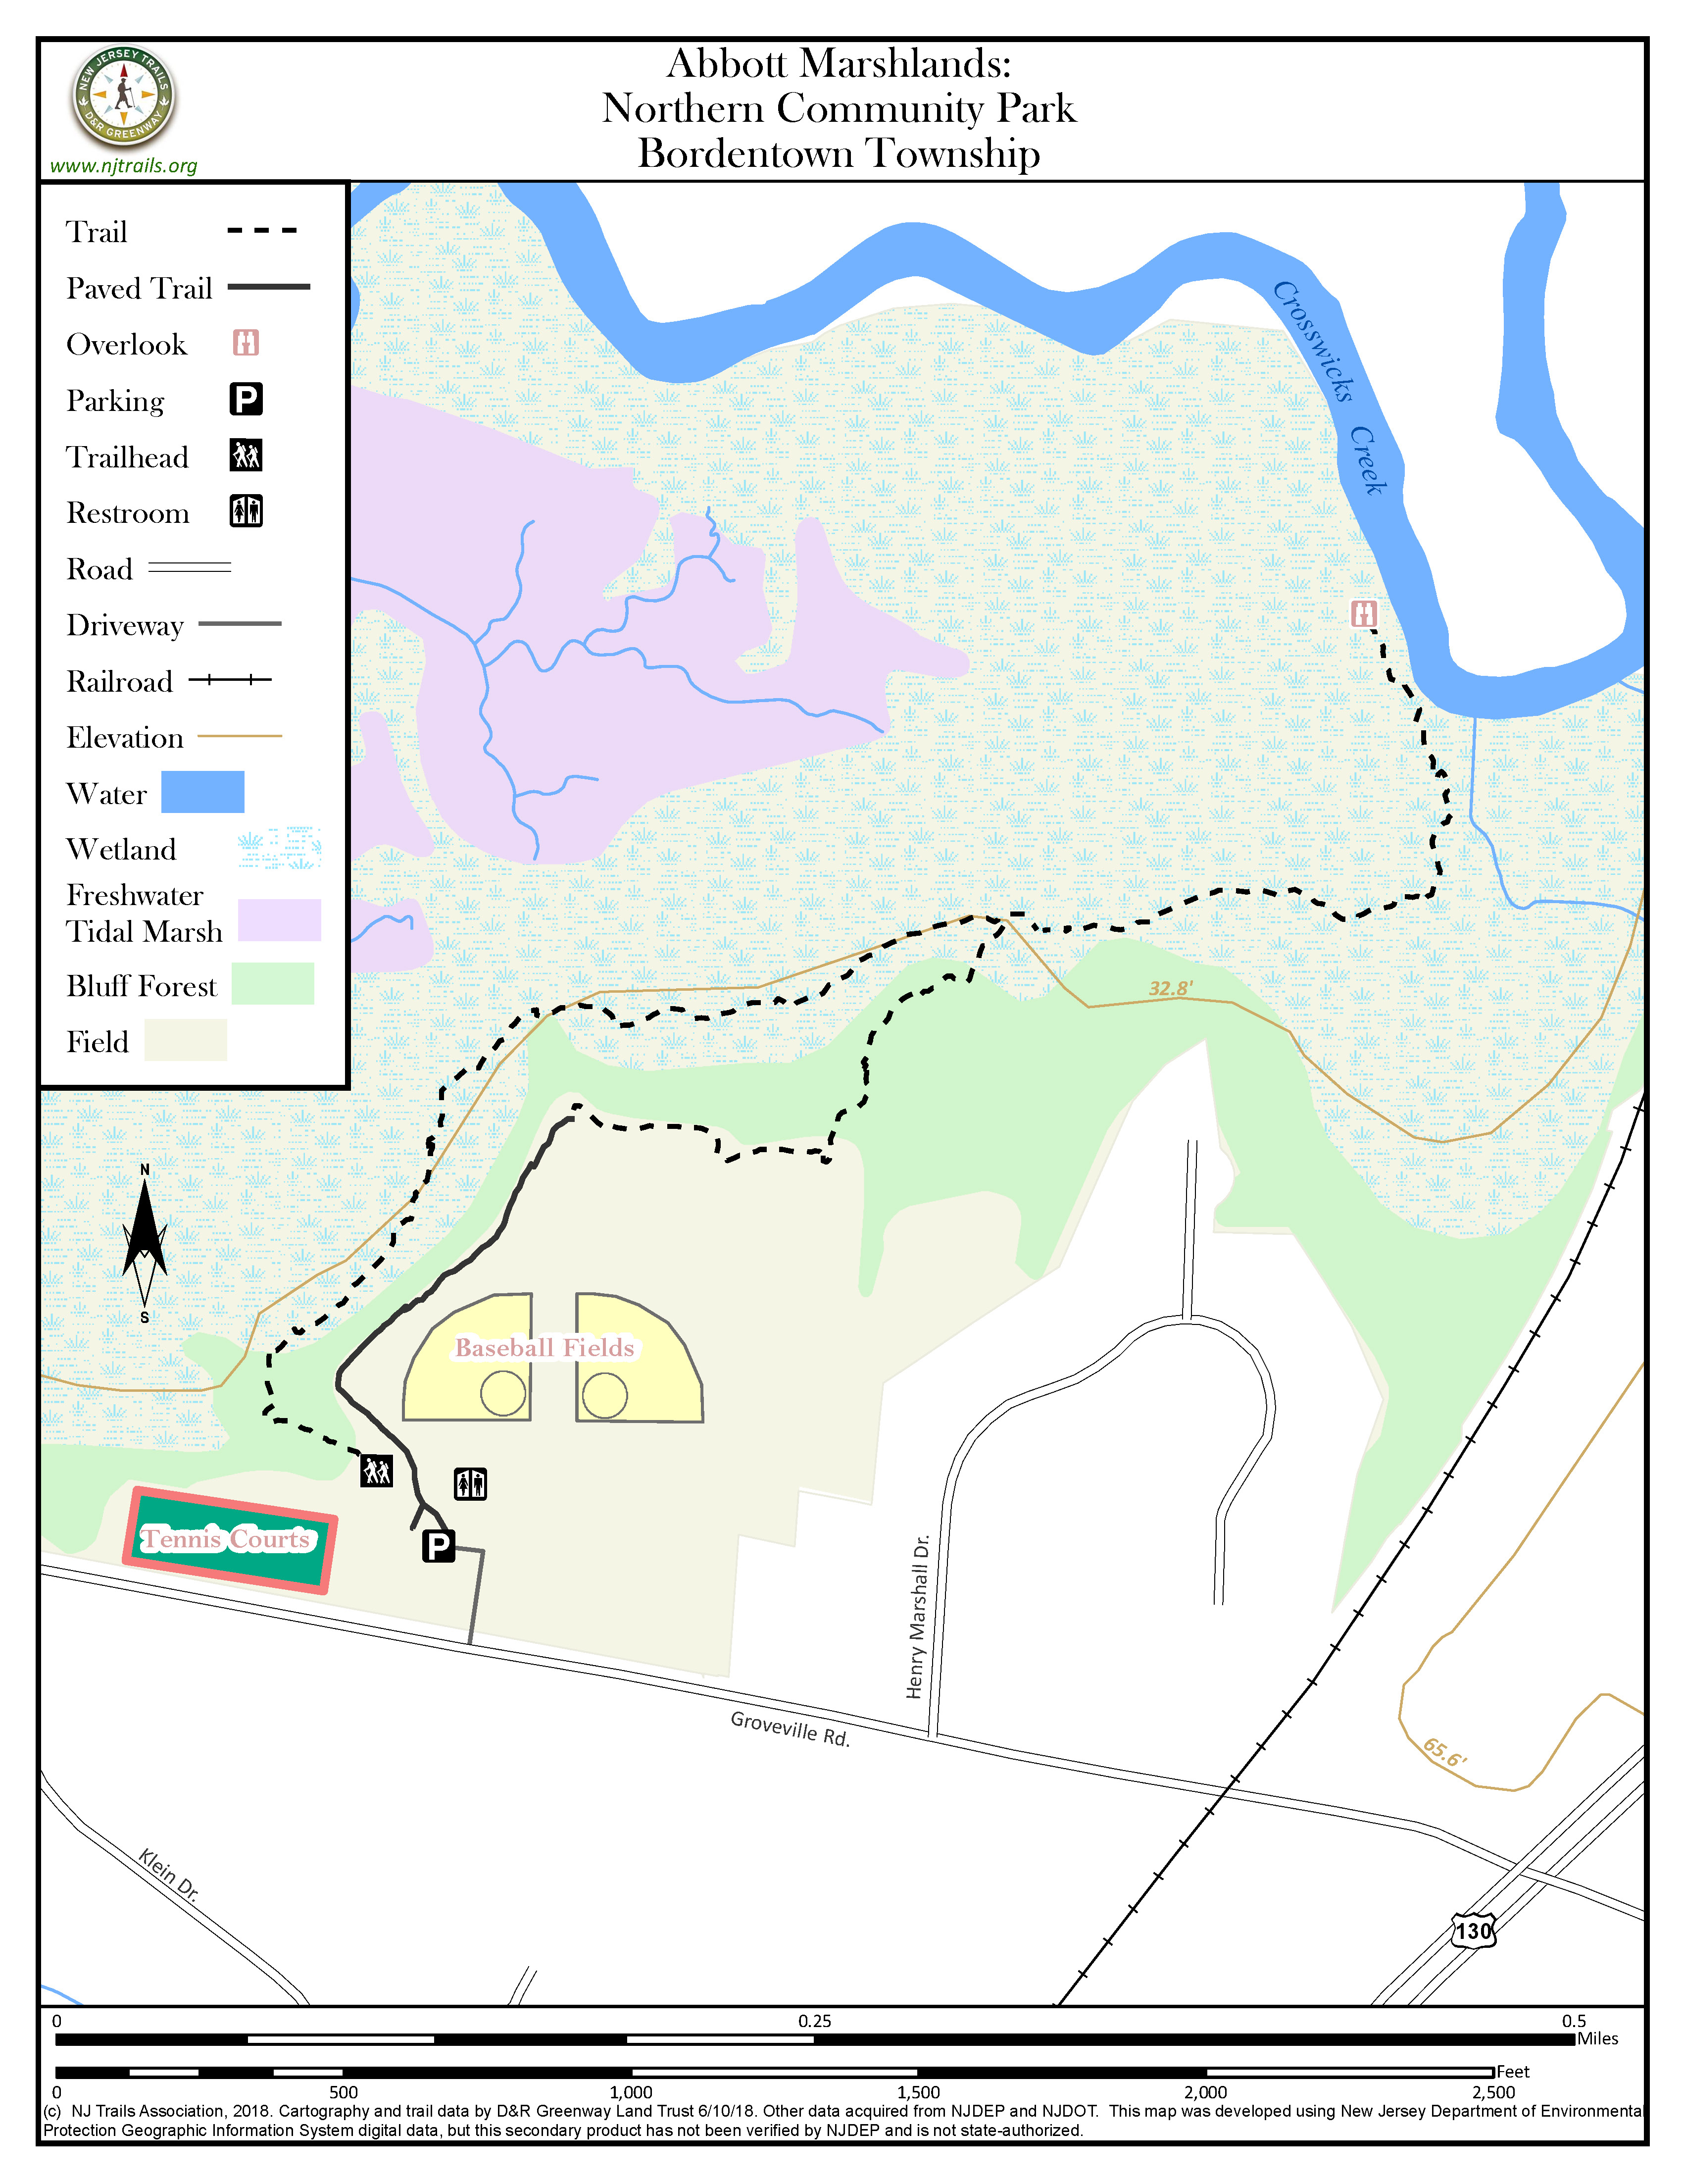 Abbott Marshlands: Northern Community Park